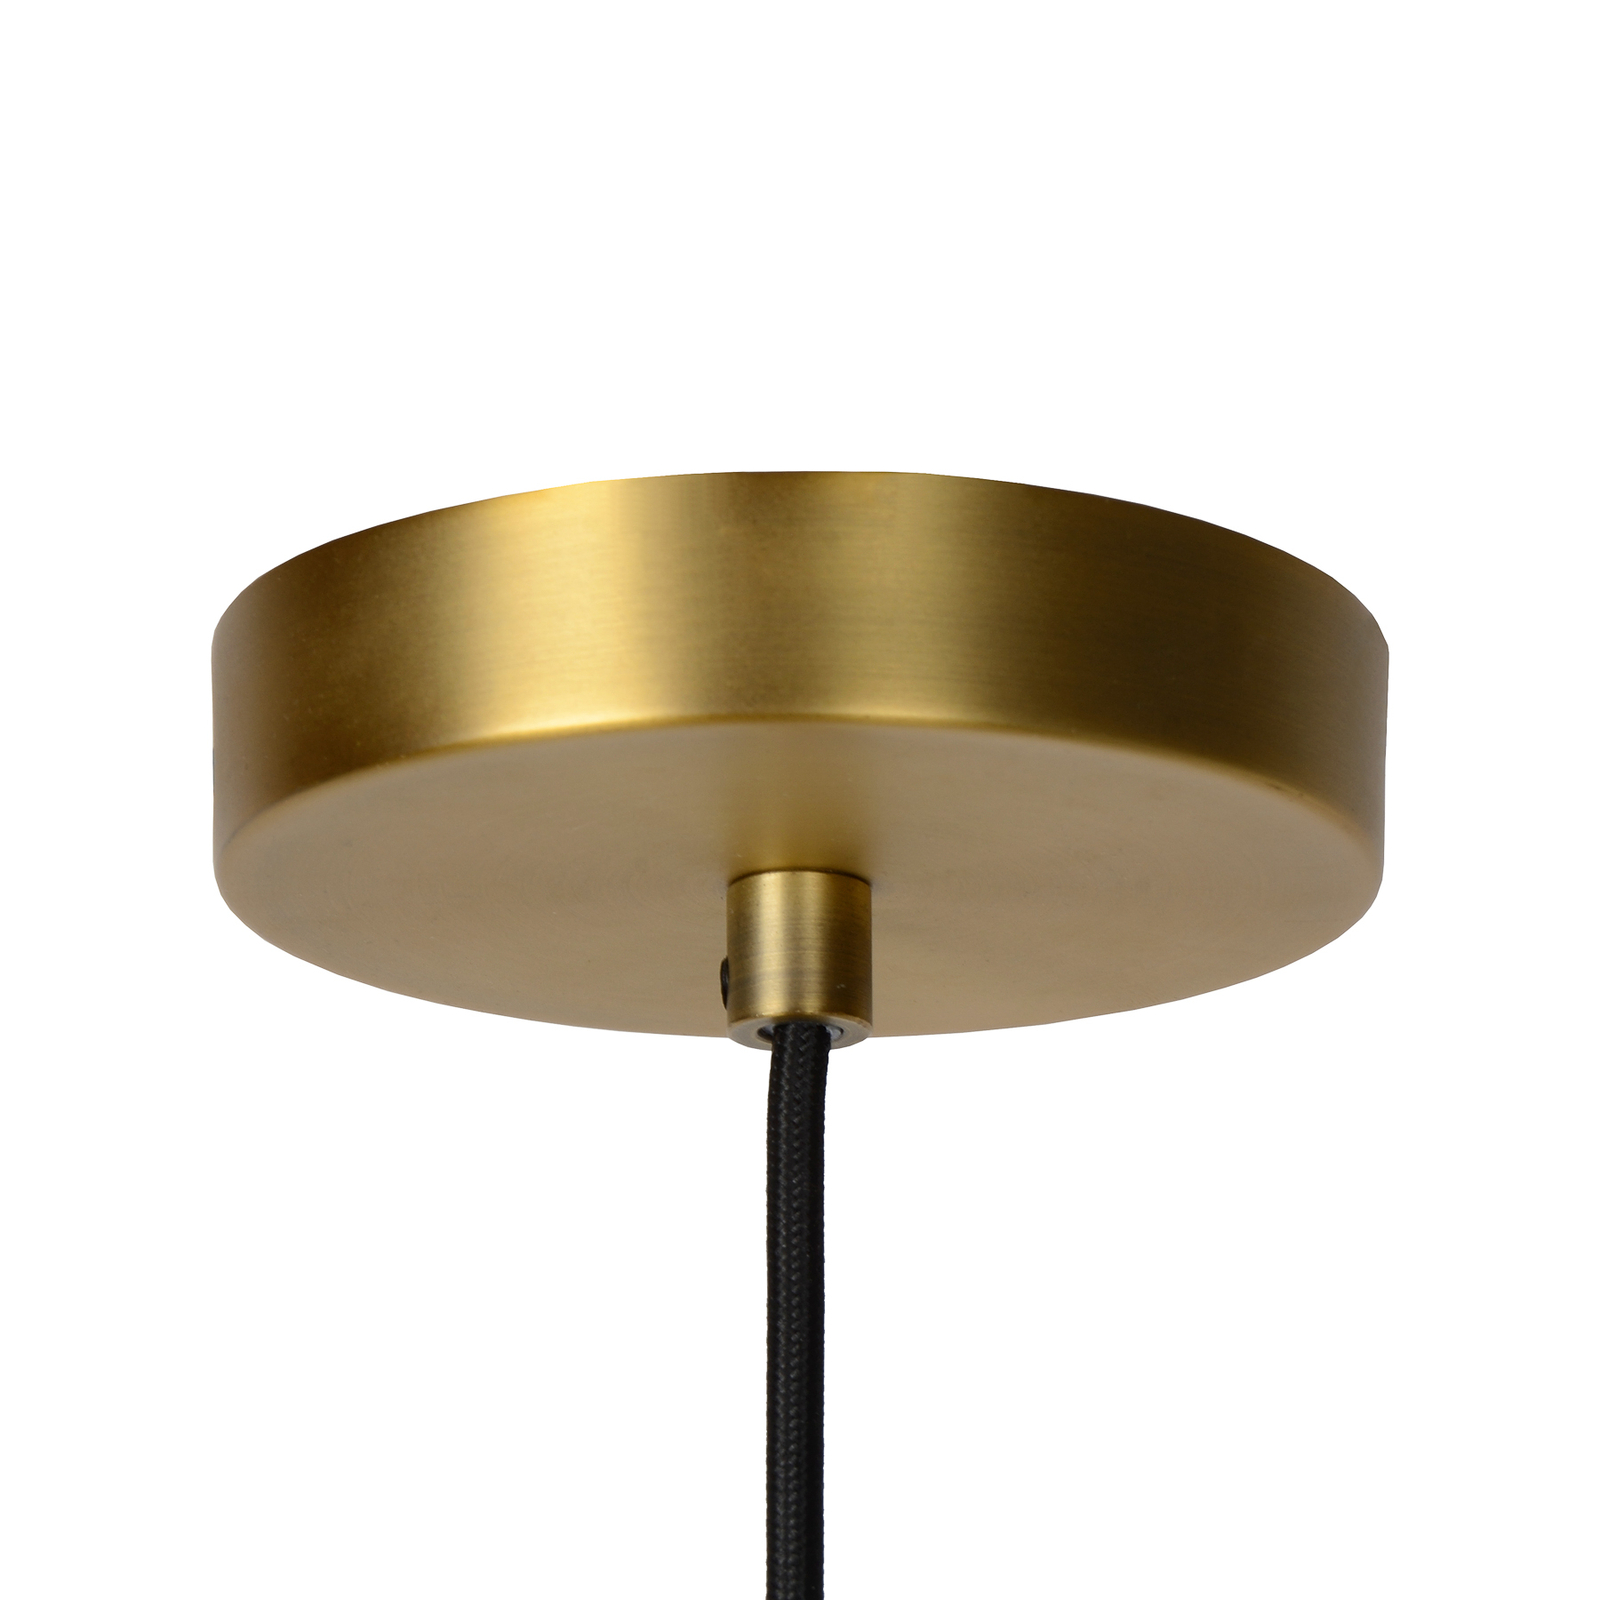 Firmin glazen hanglamp, Ø 30 cm